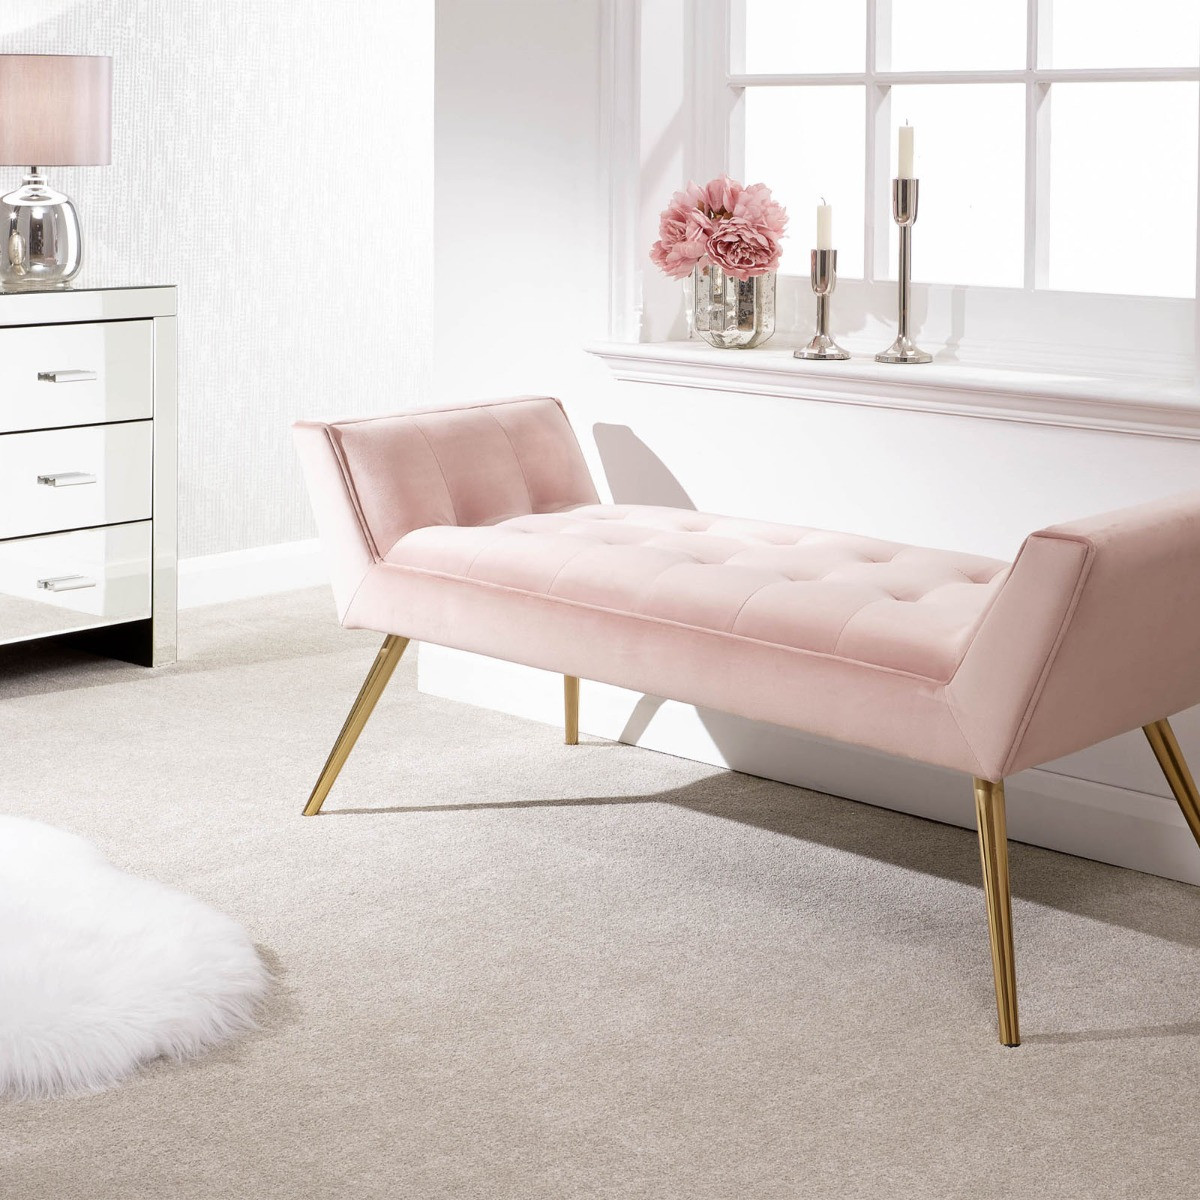 Turin Upholstered Window Seat - Blush Pink>